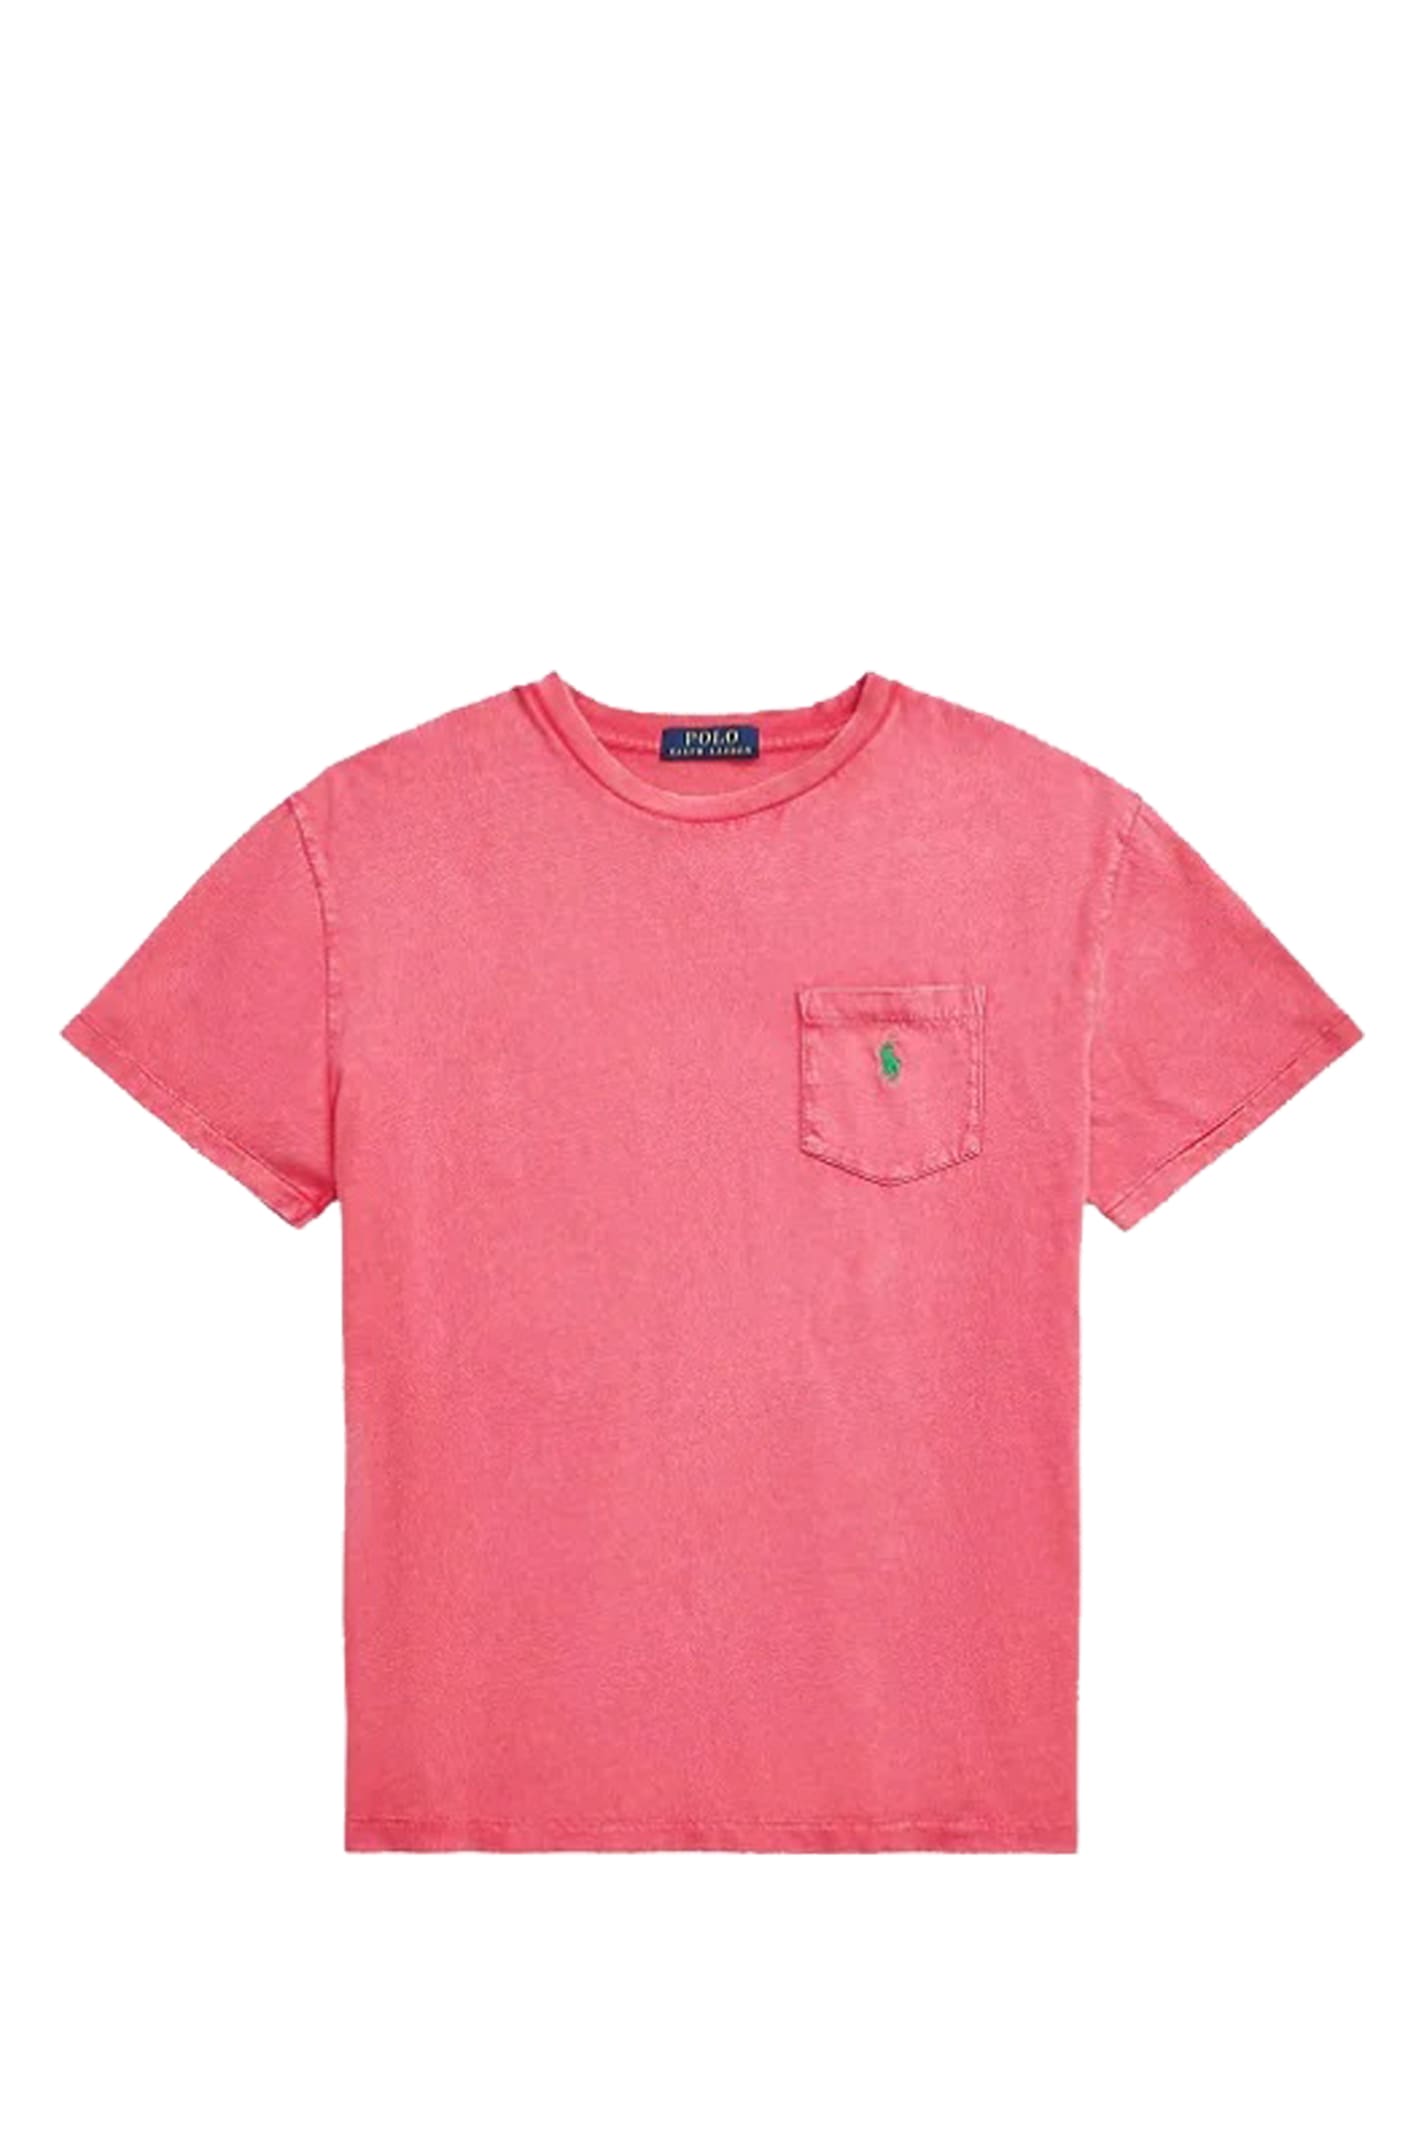 Shop Polo Ralph Lauren T-shirt In Red